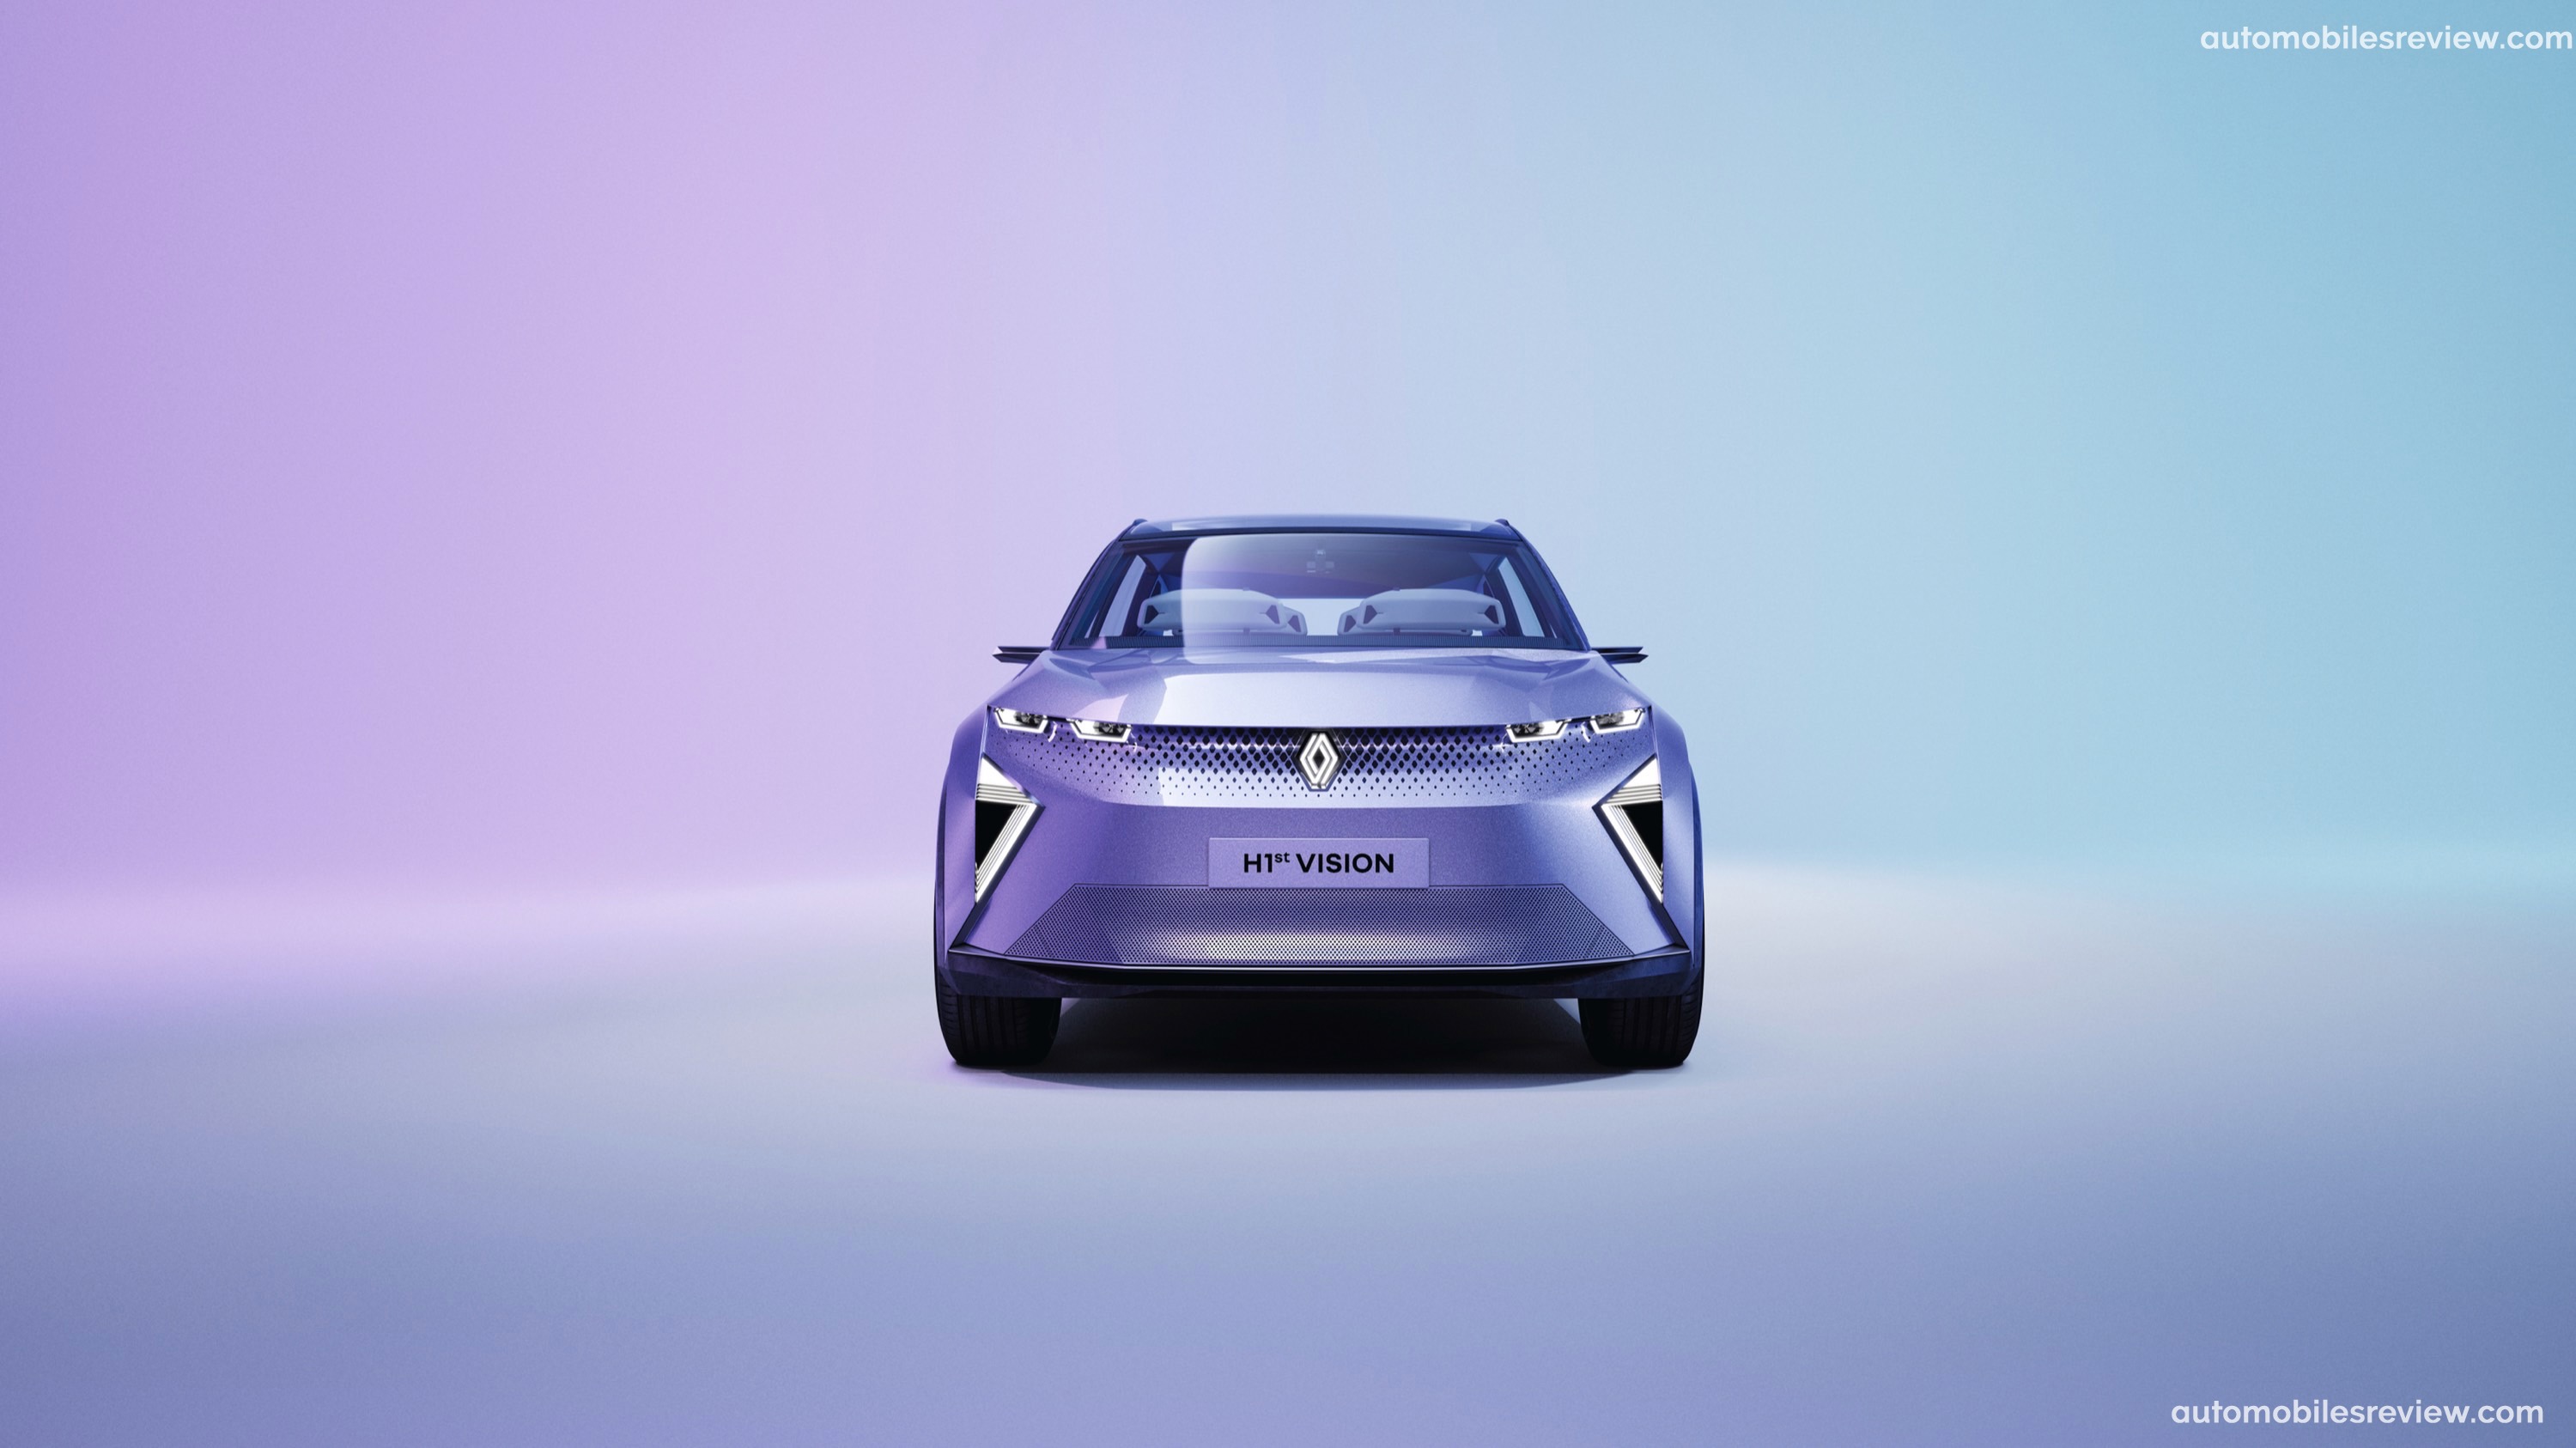 Renault H1st Vision Concept